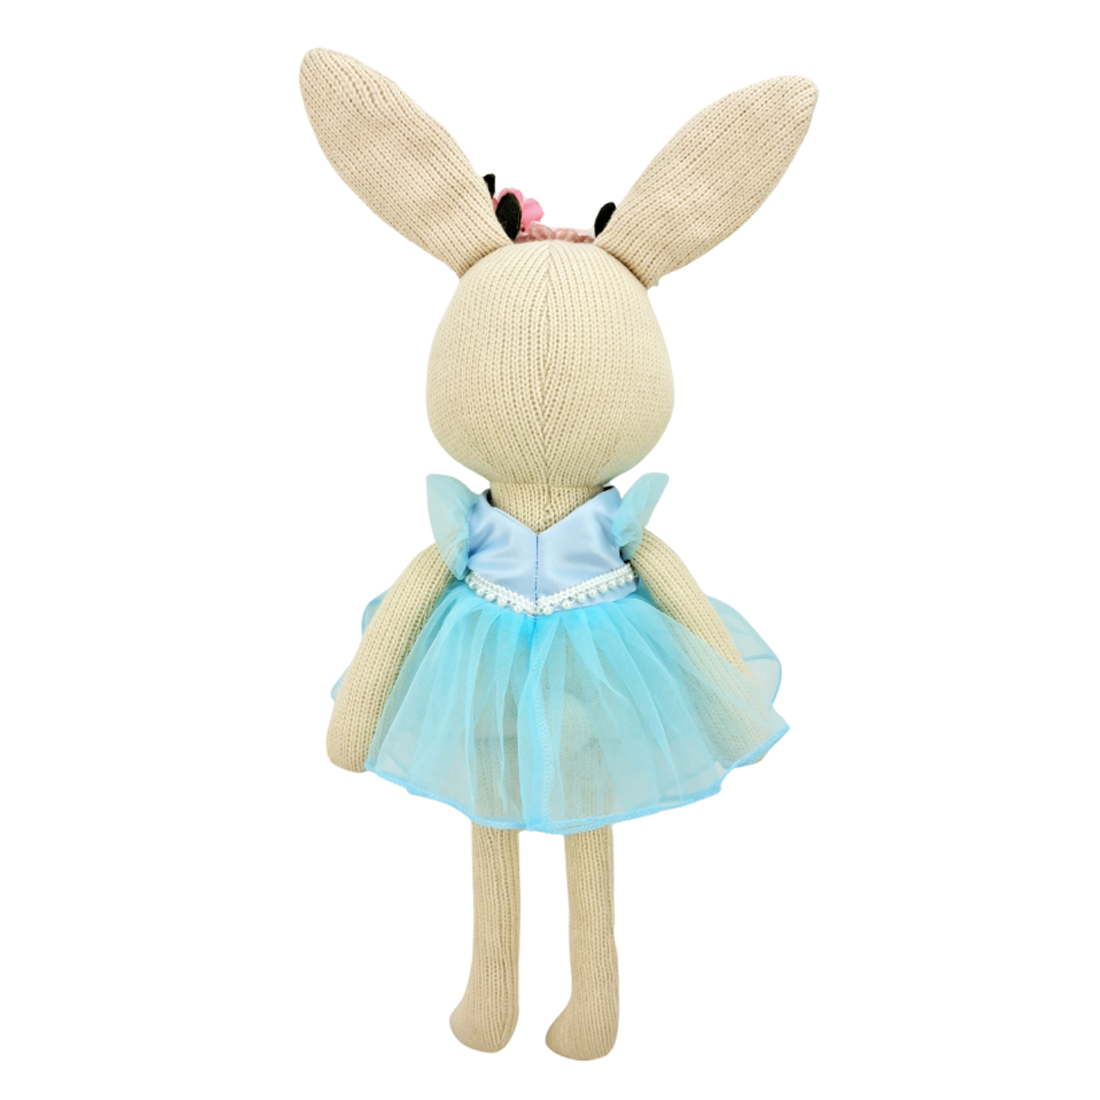 Beatrice The Bunny Plush Toy